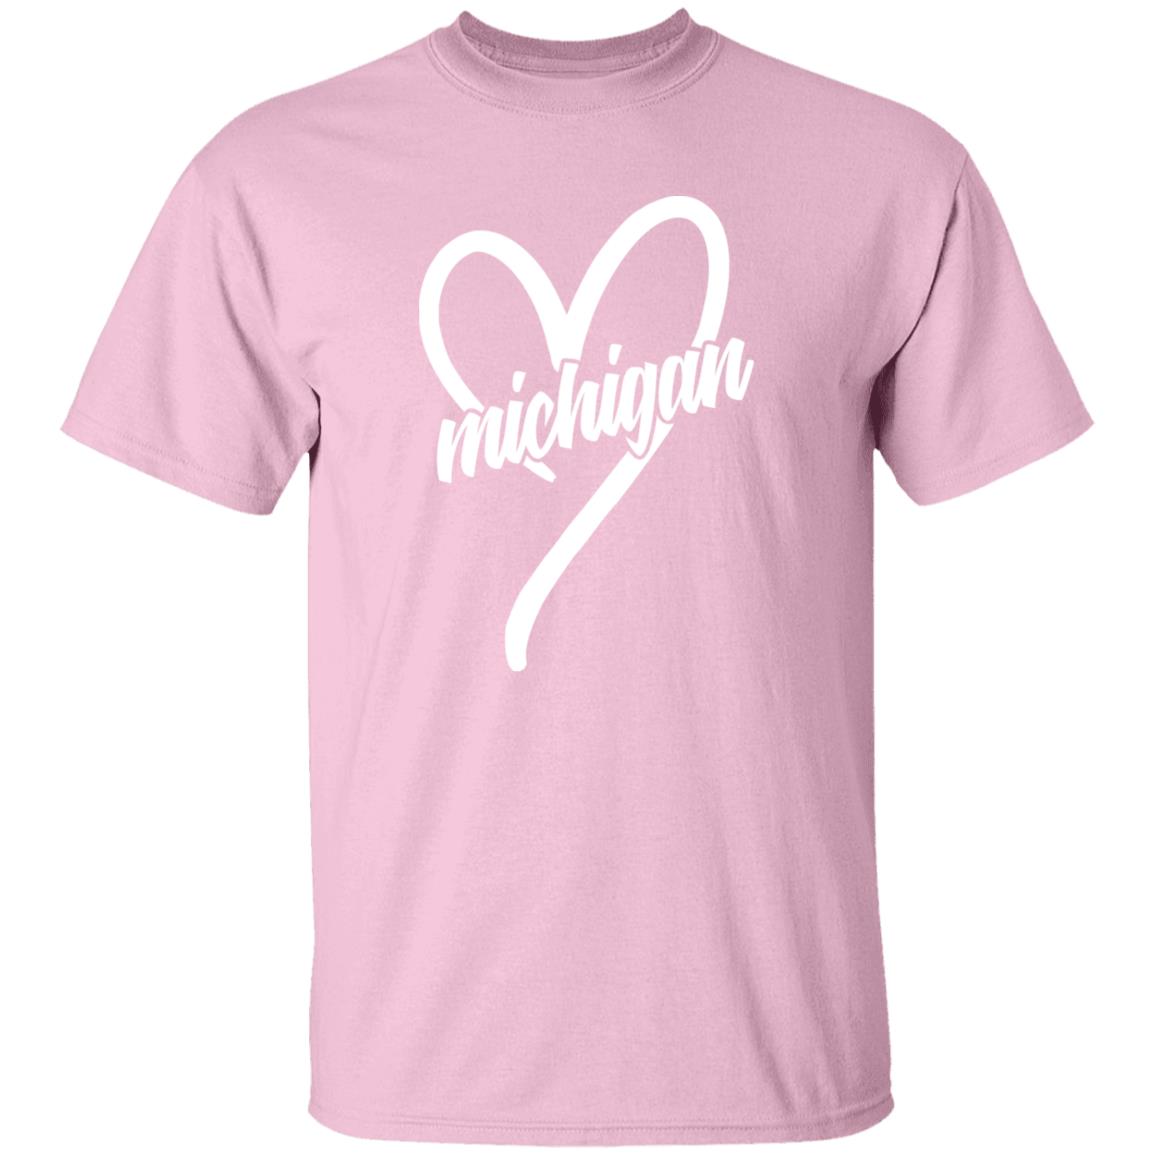 Michigan Heart - White G500B Youth 5.3 oz 100% Cotton T-Shirt